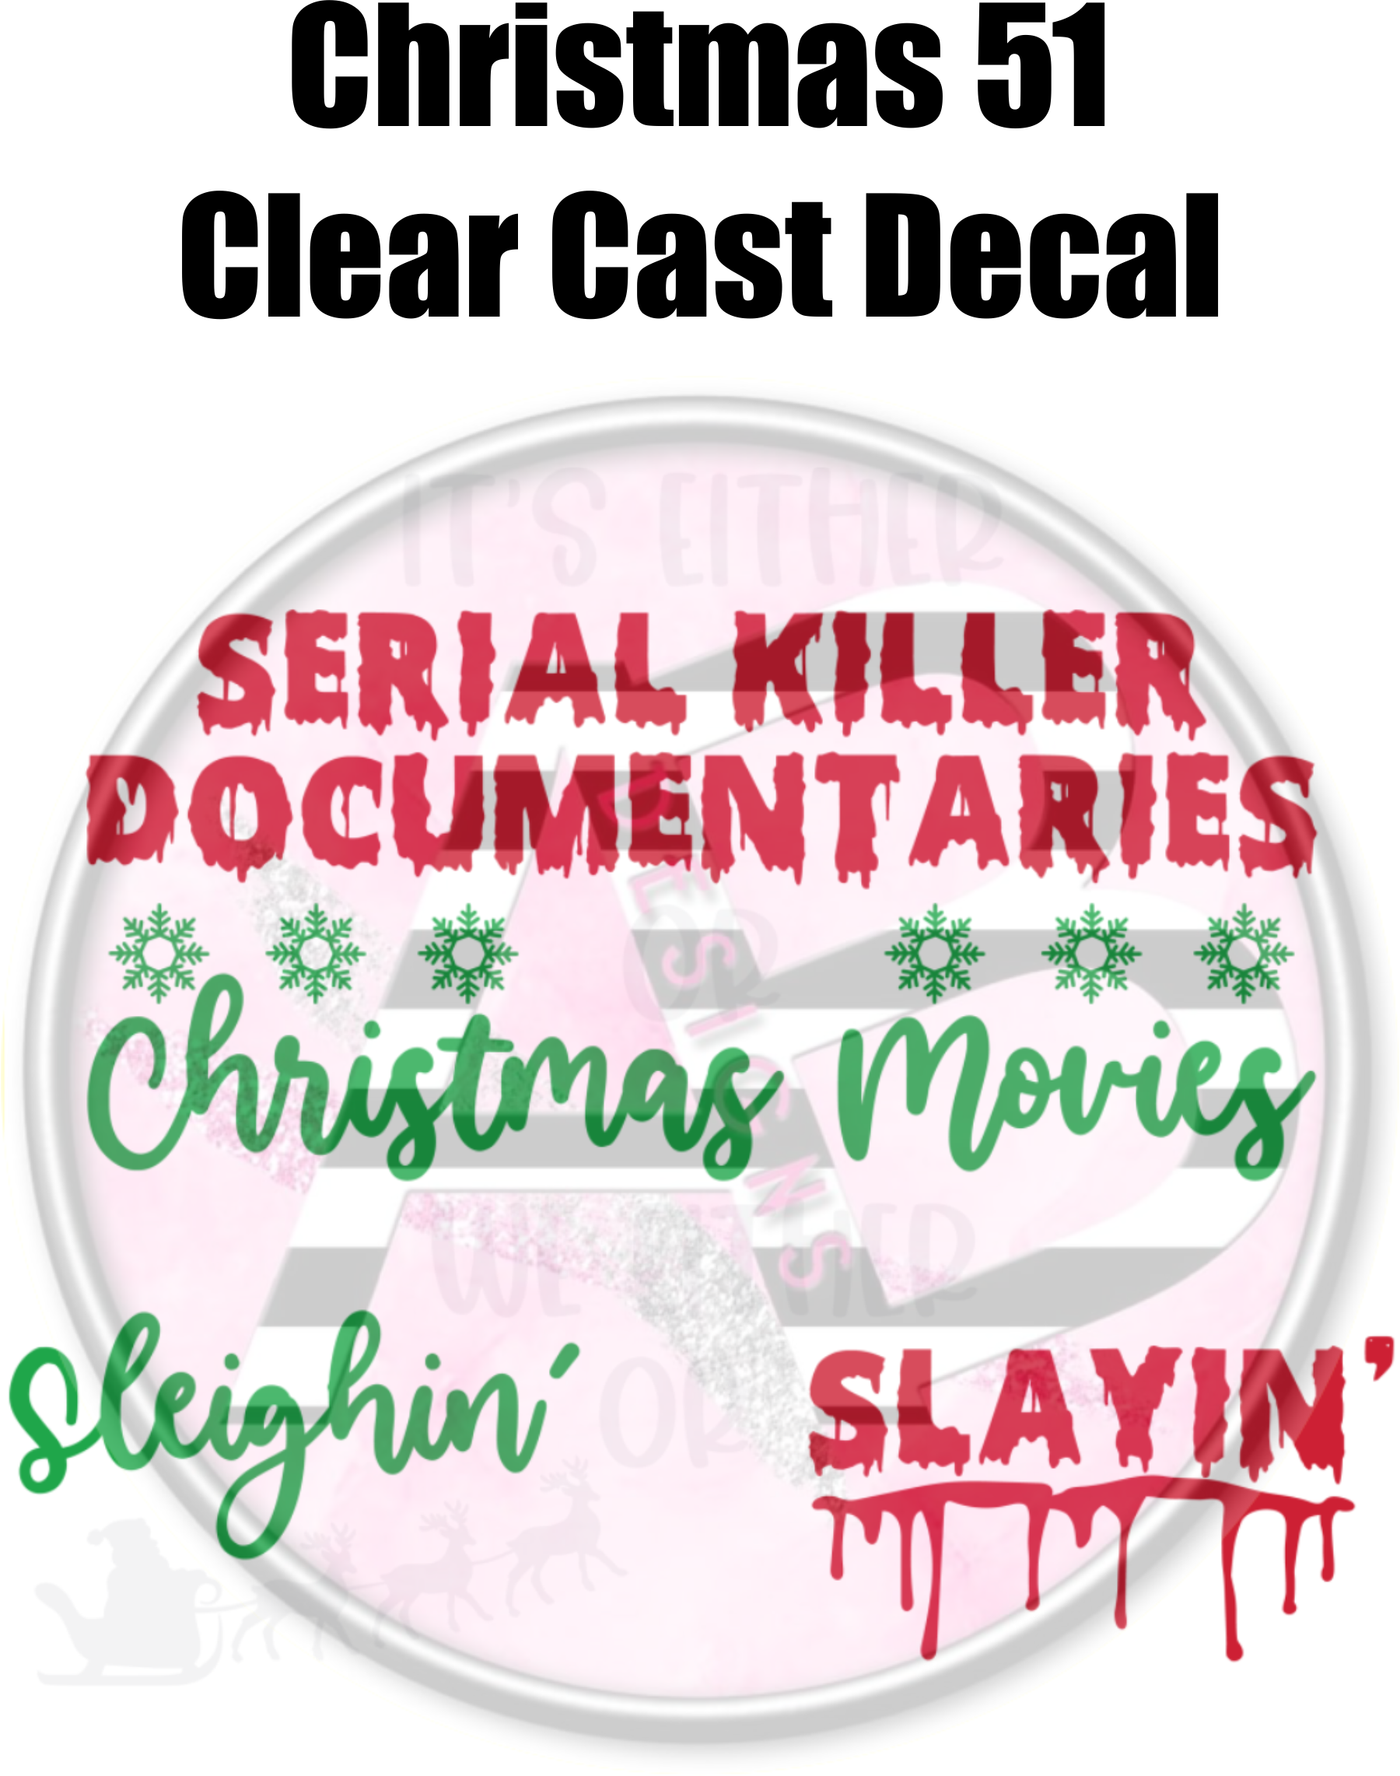 Christmas 51 - Clear Cast Decal